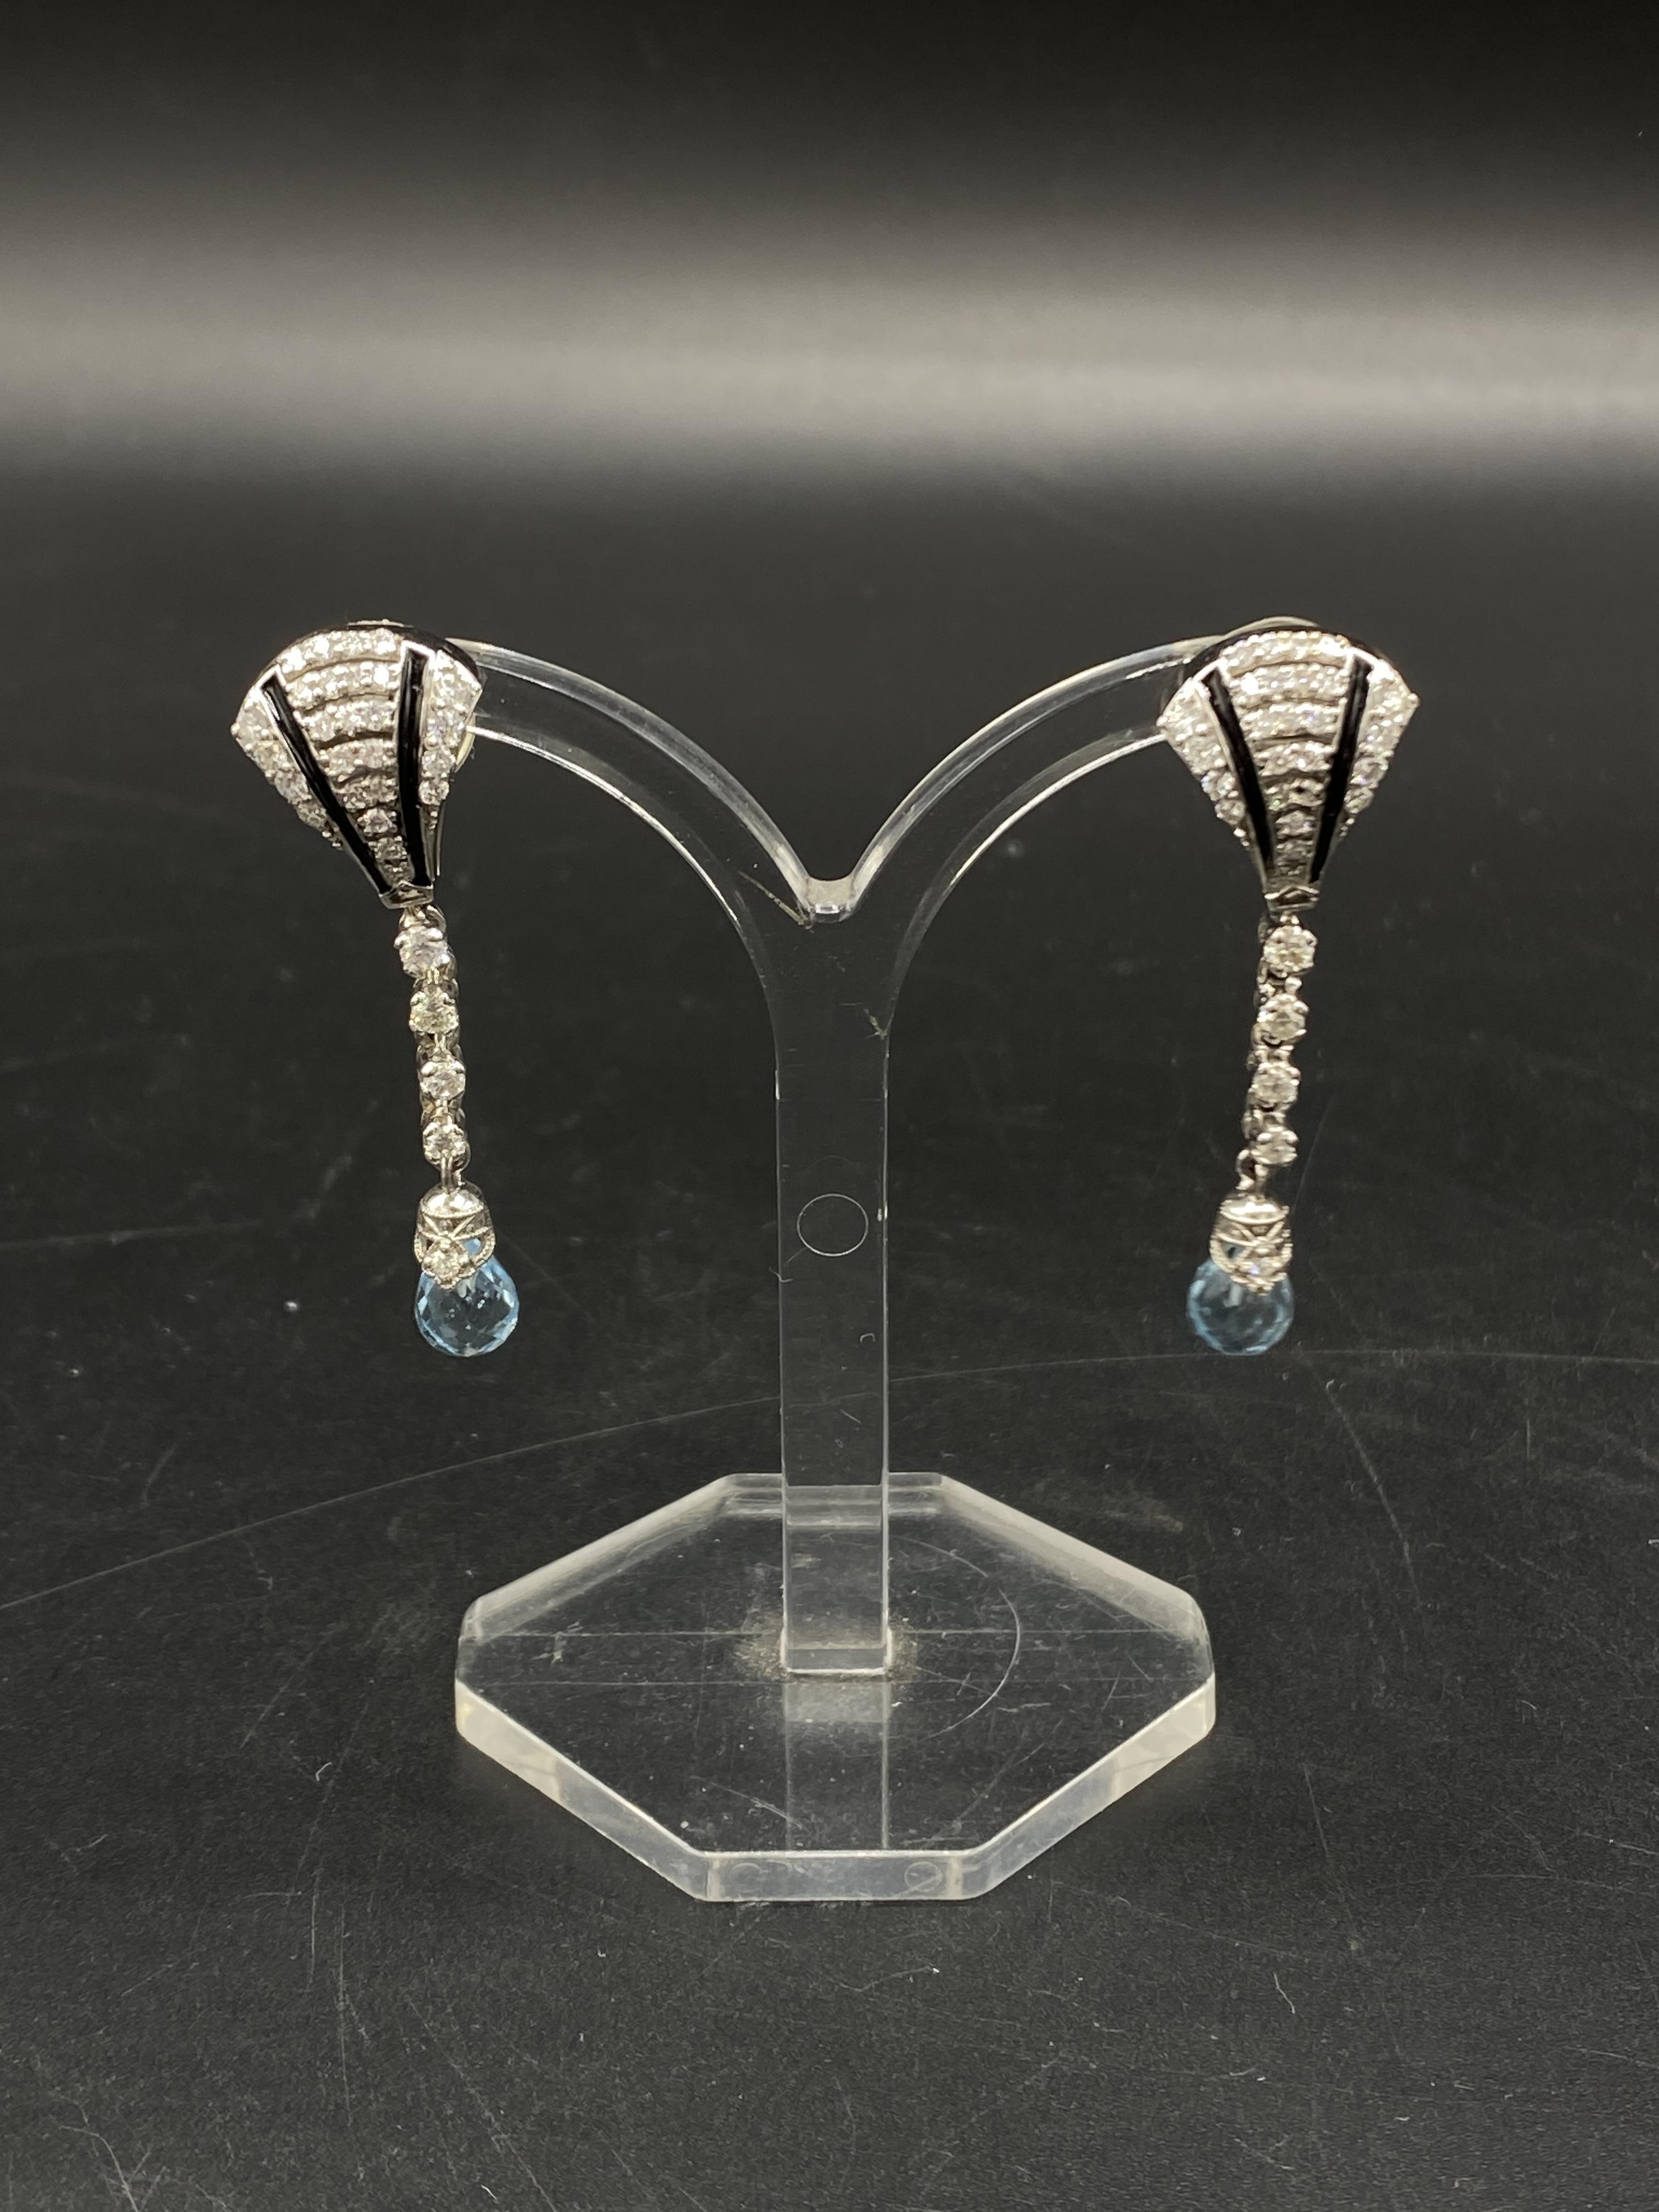 18ct white gold, diamond and aquamarine drop earrings